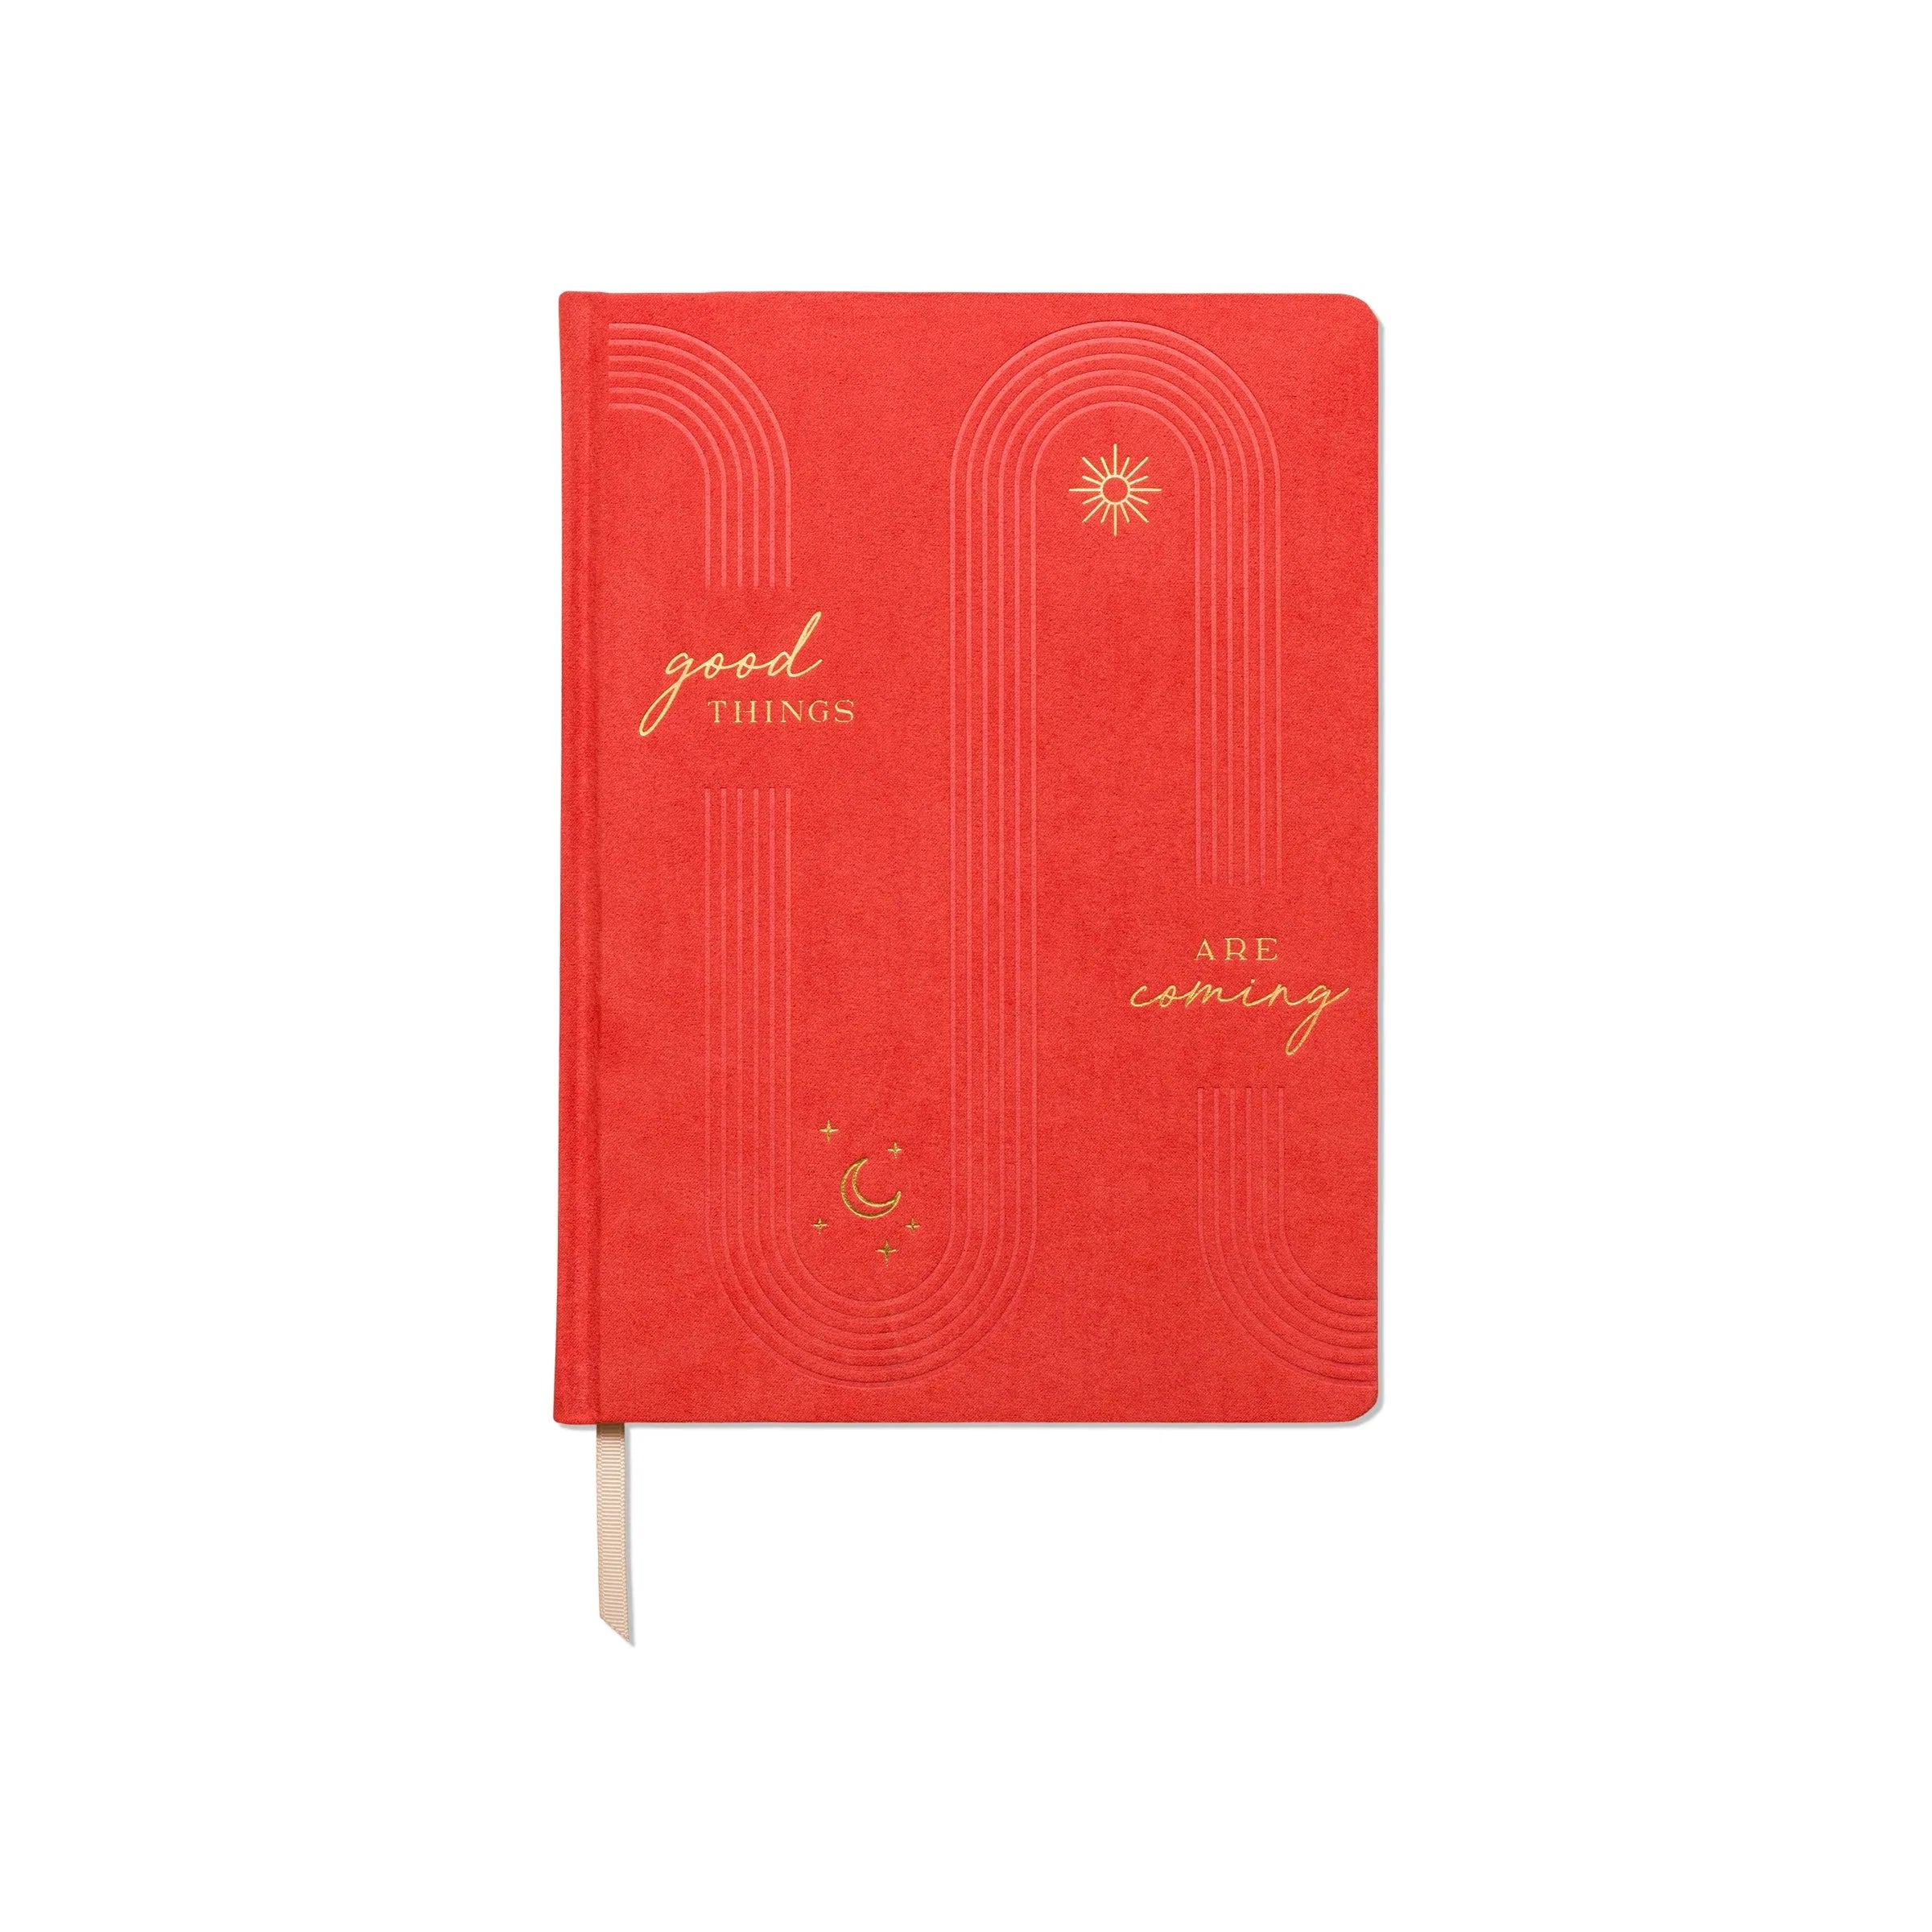 Designworks Jumbo Bookcloth Journal - Good Things are Coming